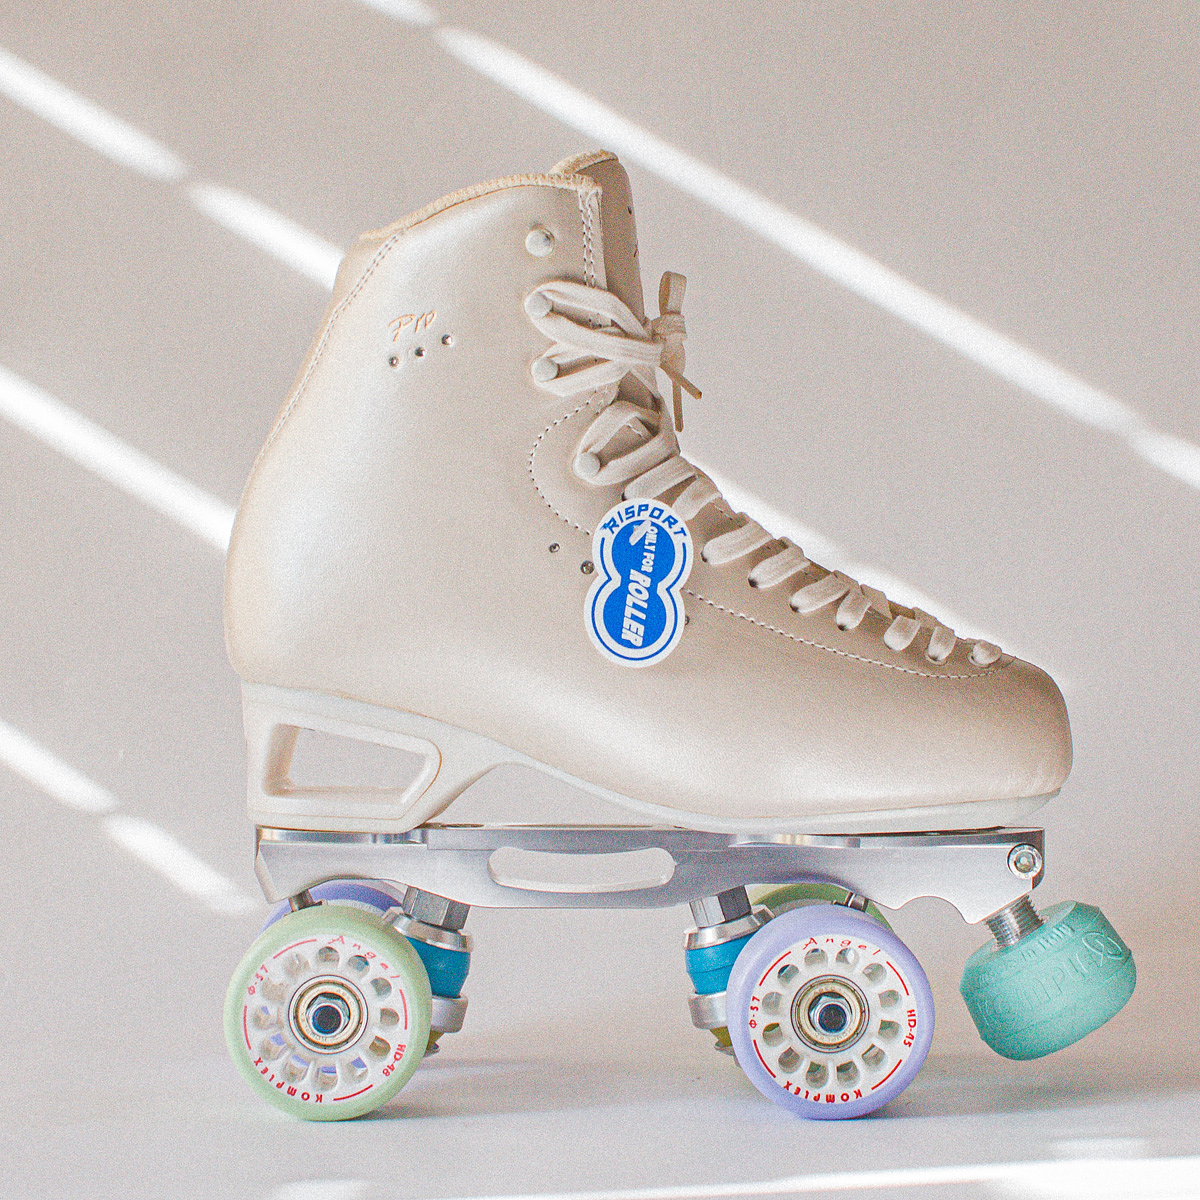 Spinner Risport para patinaje artístico  Patinaje artístico, Patinaje, Patinaje  artístico sobre hielo